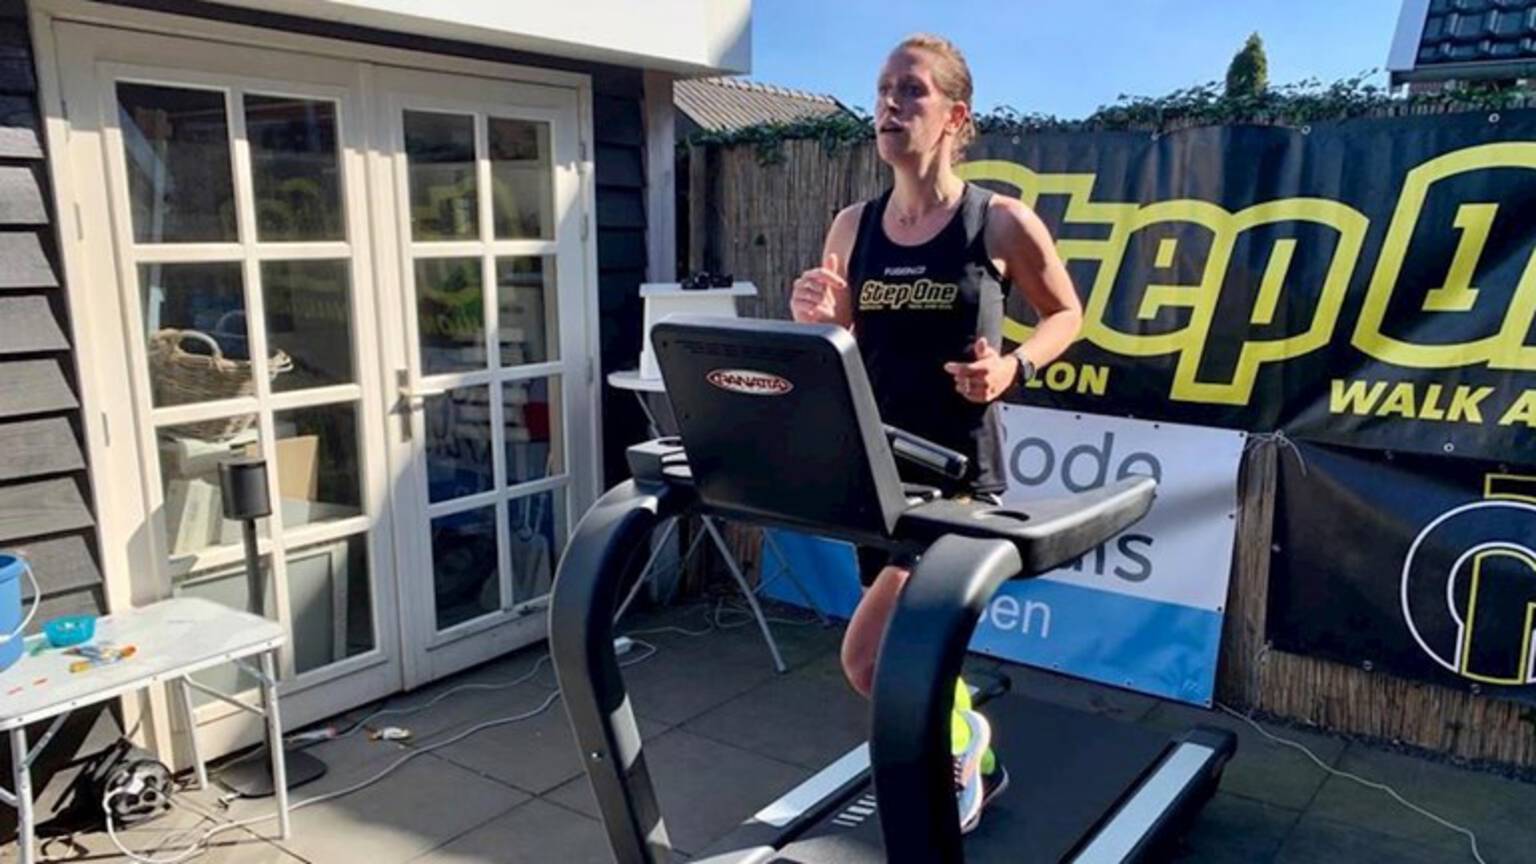 Sabine Wassink during her world record treadmill marathon, photo by RTV Oost